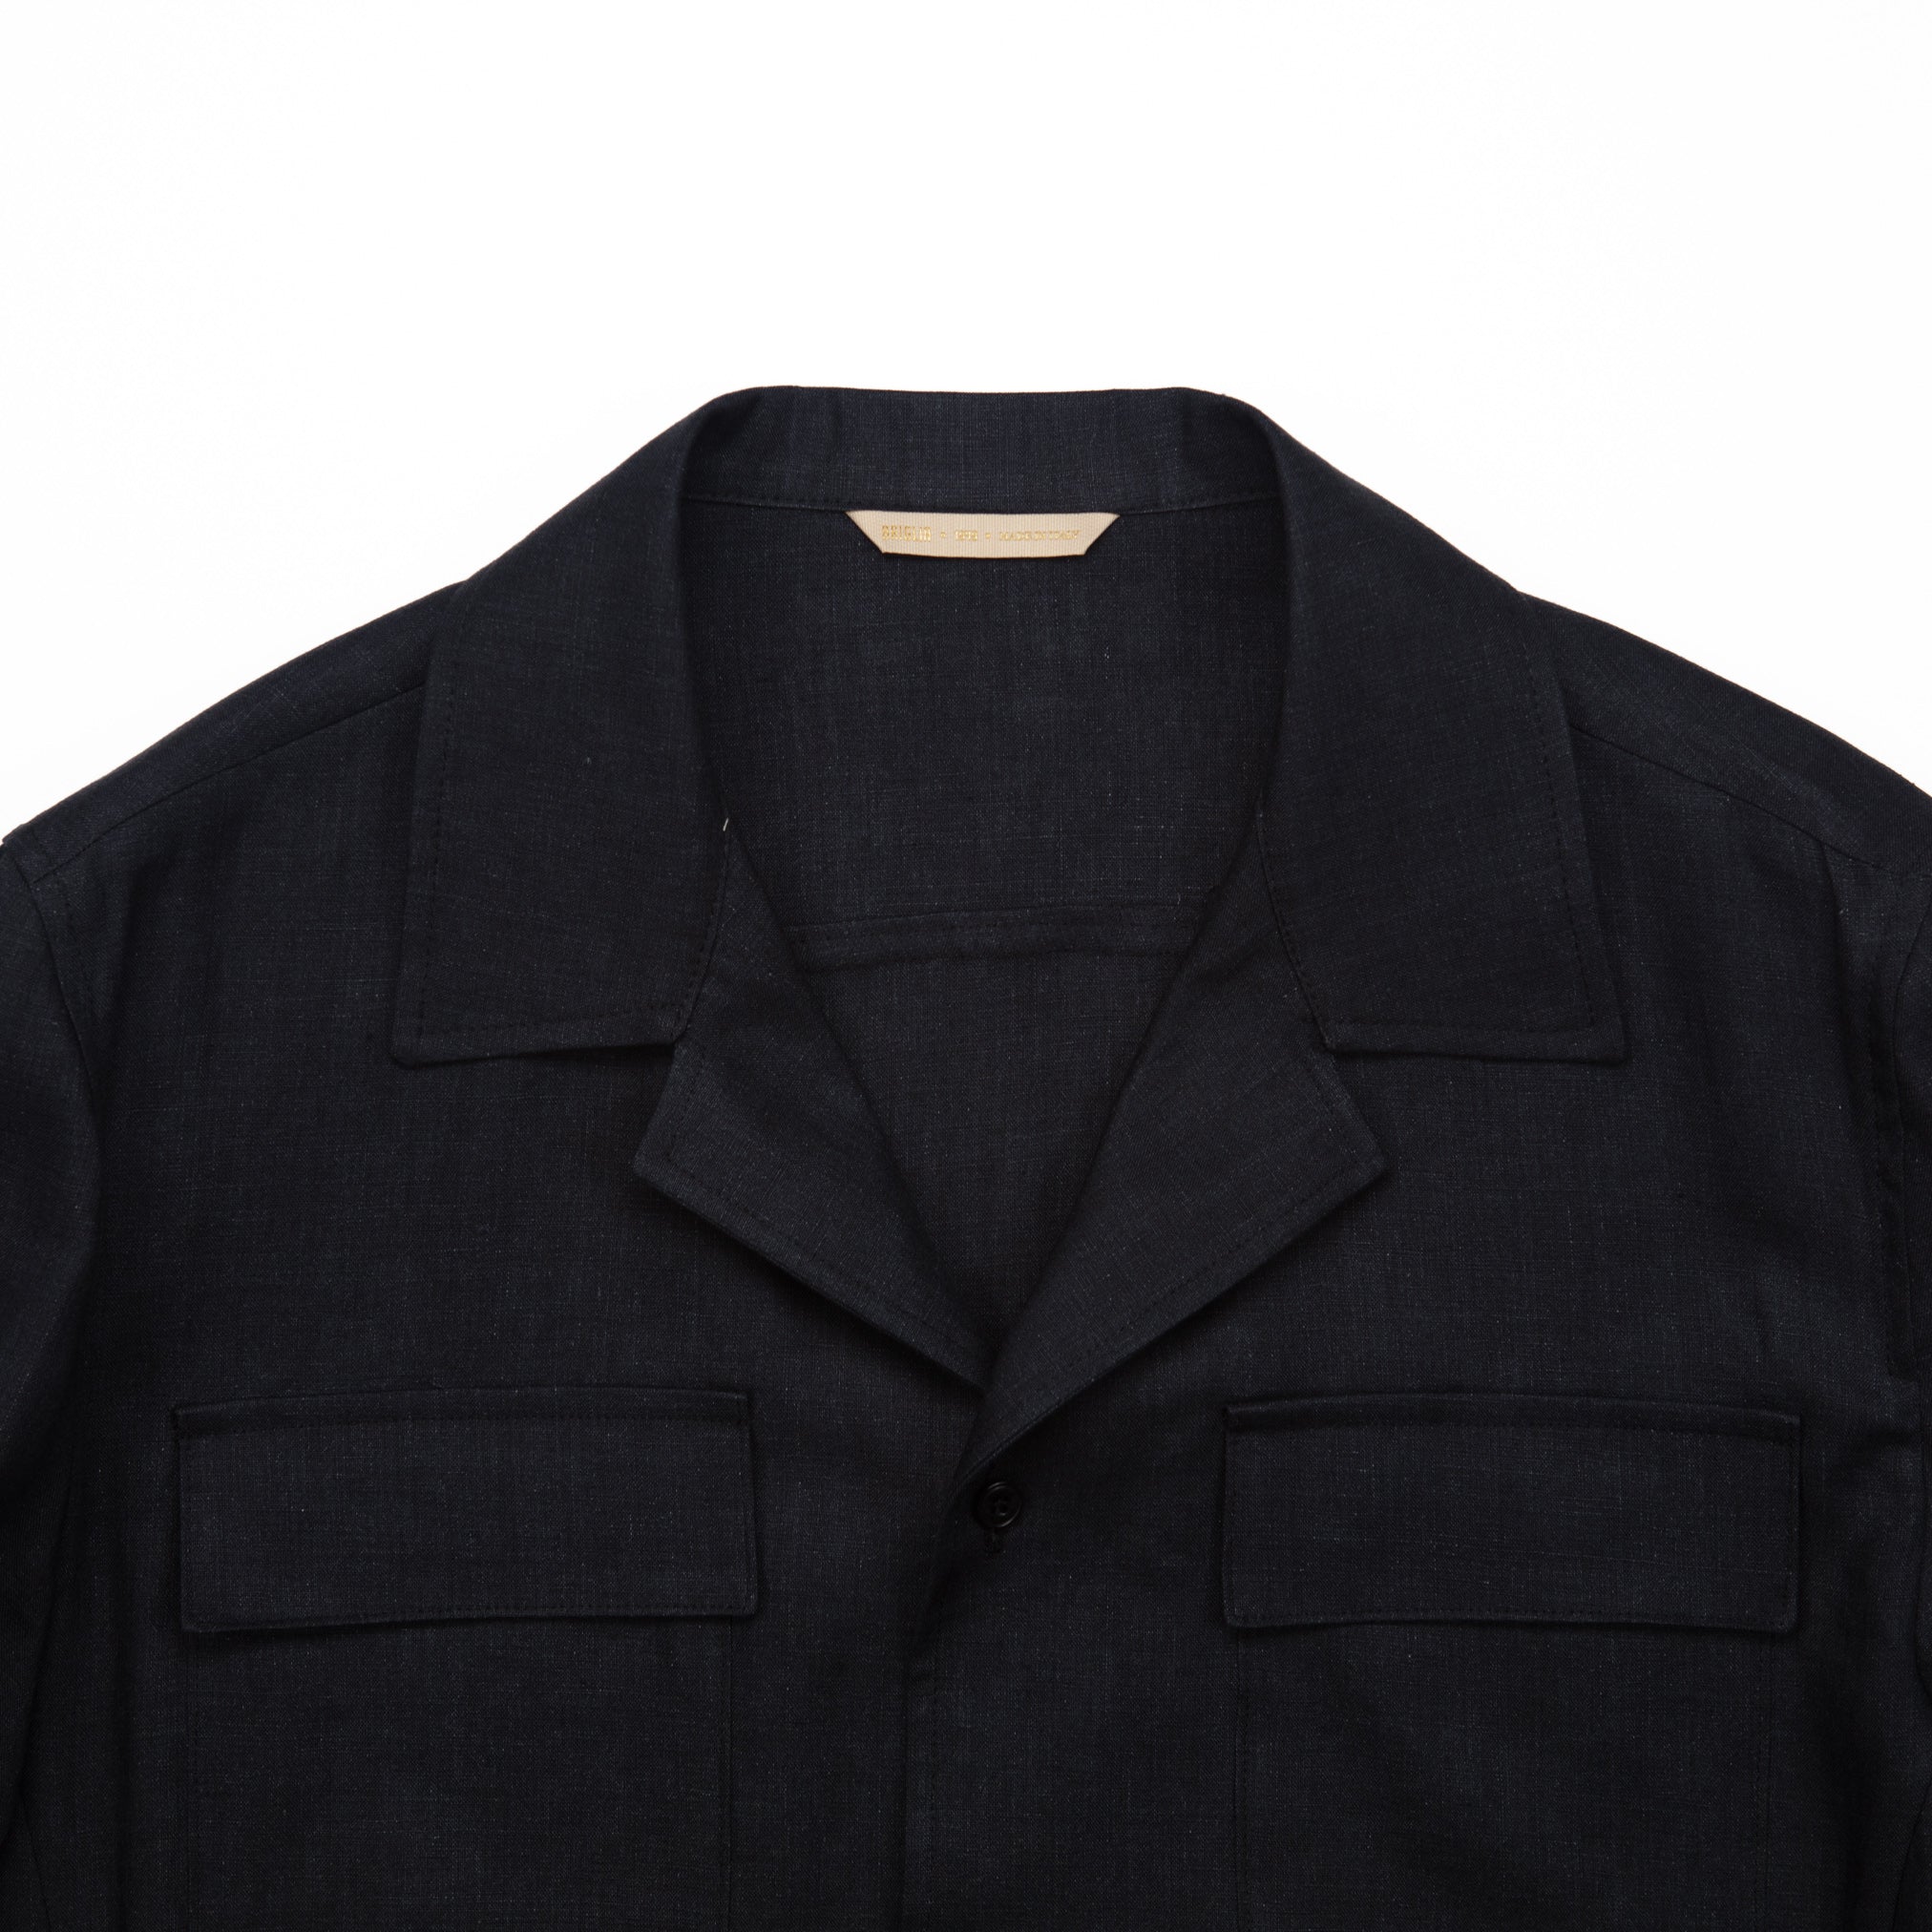 John Shirt Jacket in Black Linen